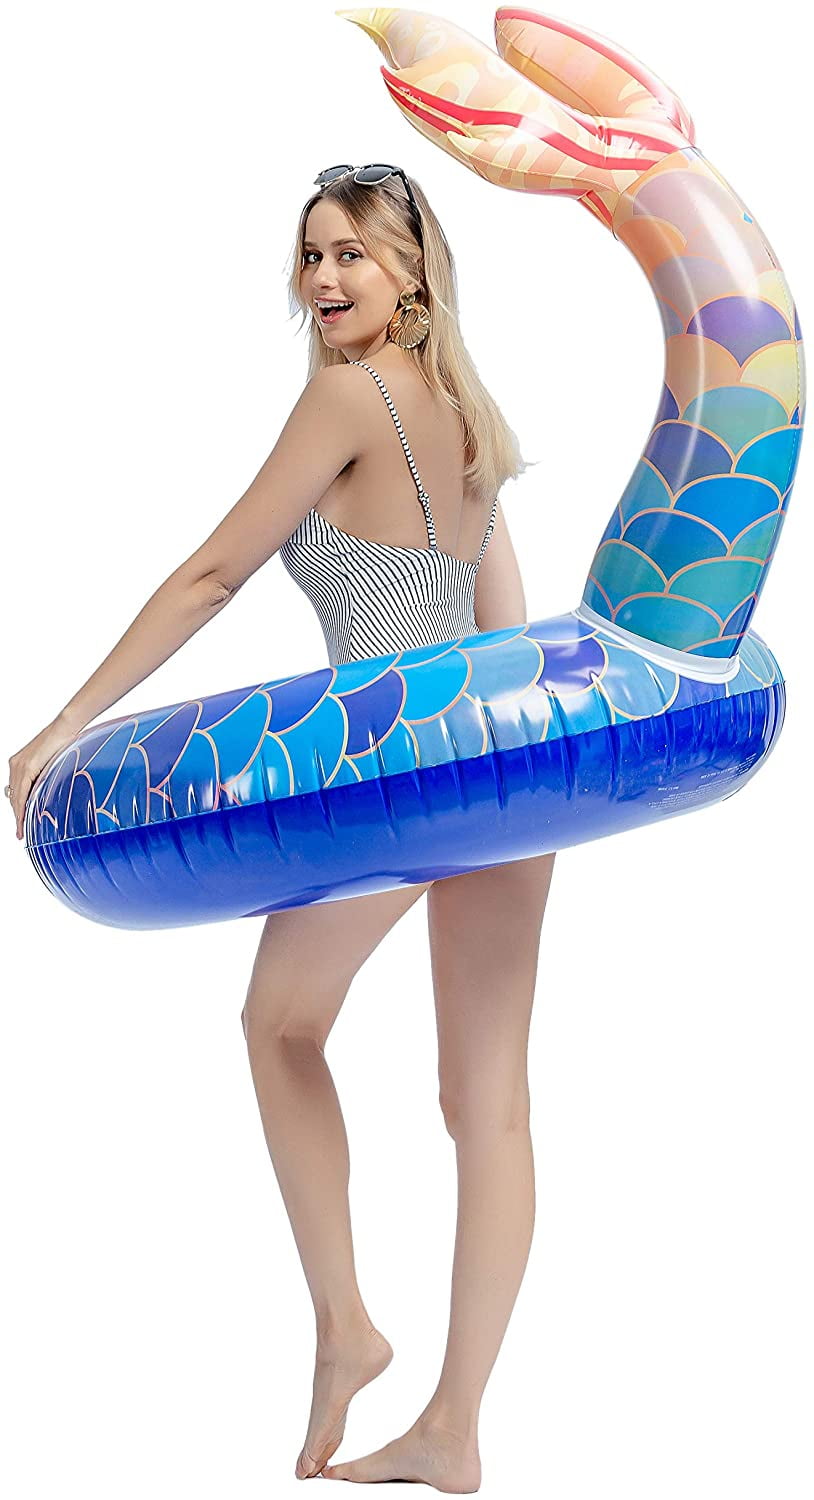 JOYIN Inflatable Mermaid Tail Pool Float 39” Pool Tubes Lounge Raft Toys for 